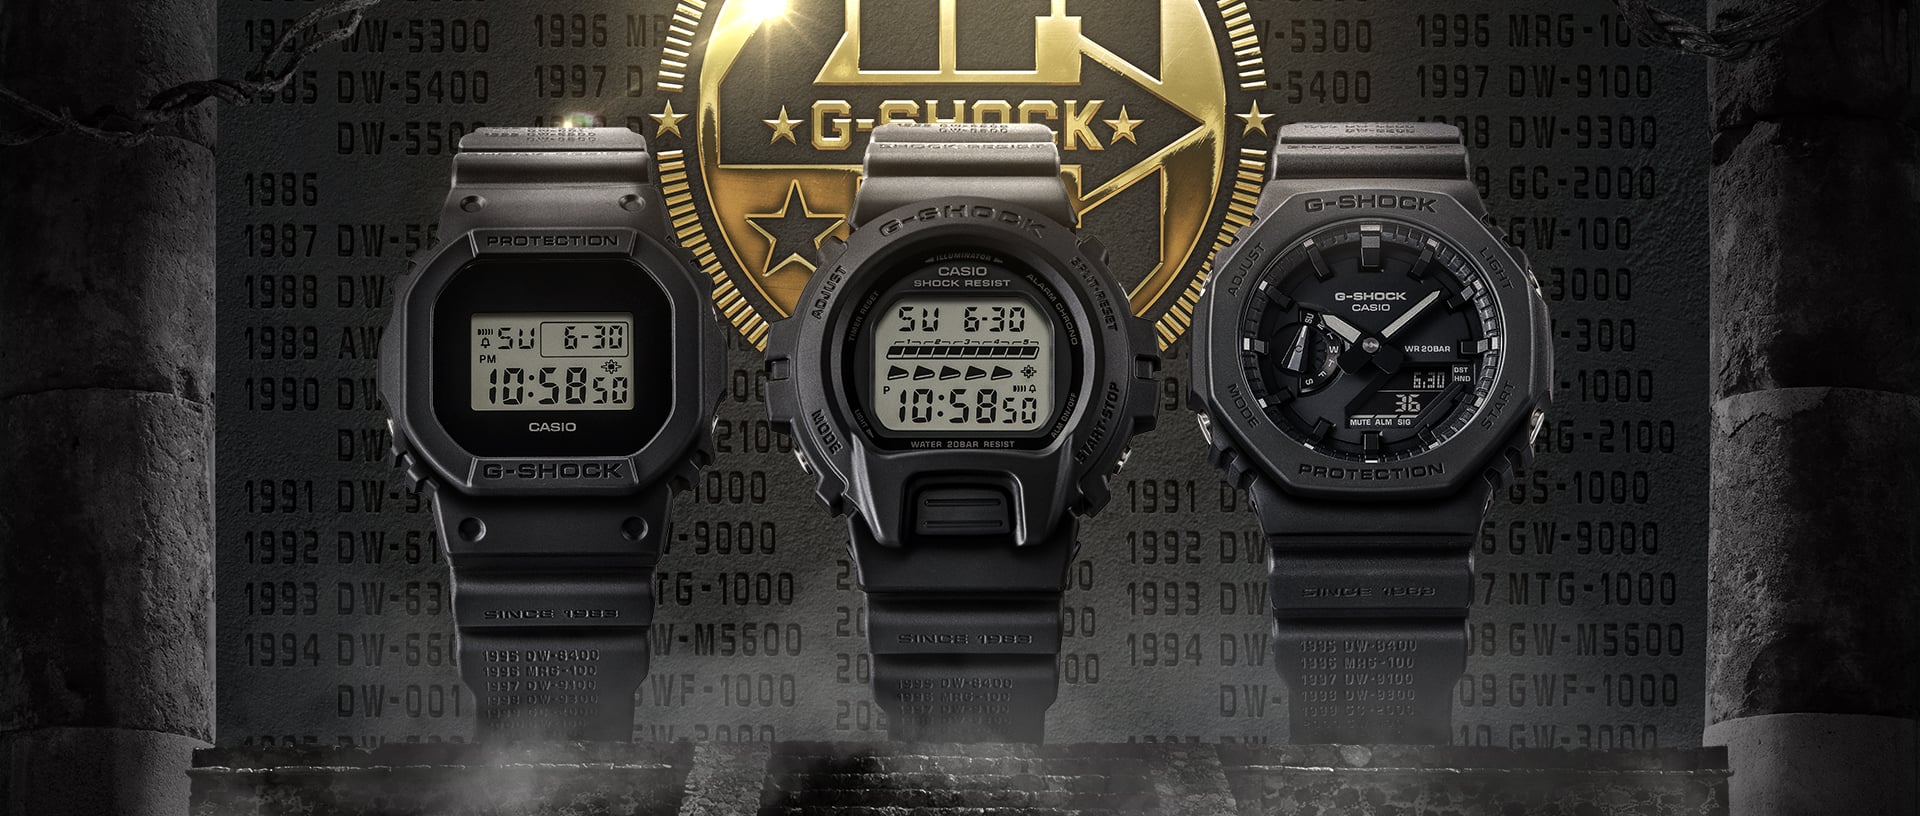 G-SHOCK 40th anniversary series Remaster Black DW5657RE-1, DW6640RE-1, GA2140RE-1A